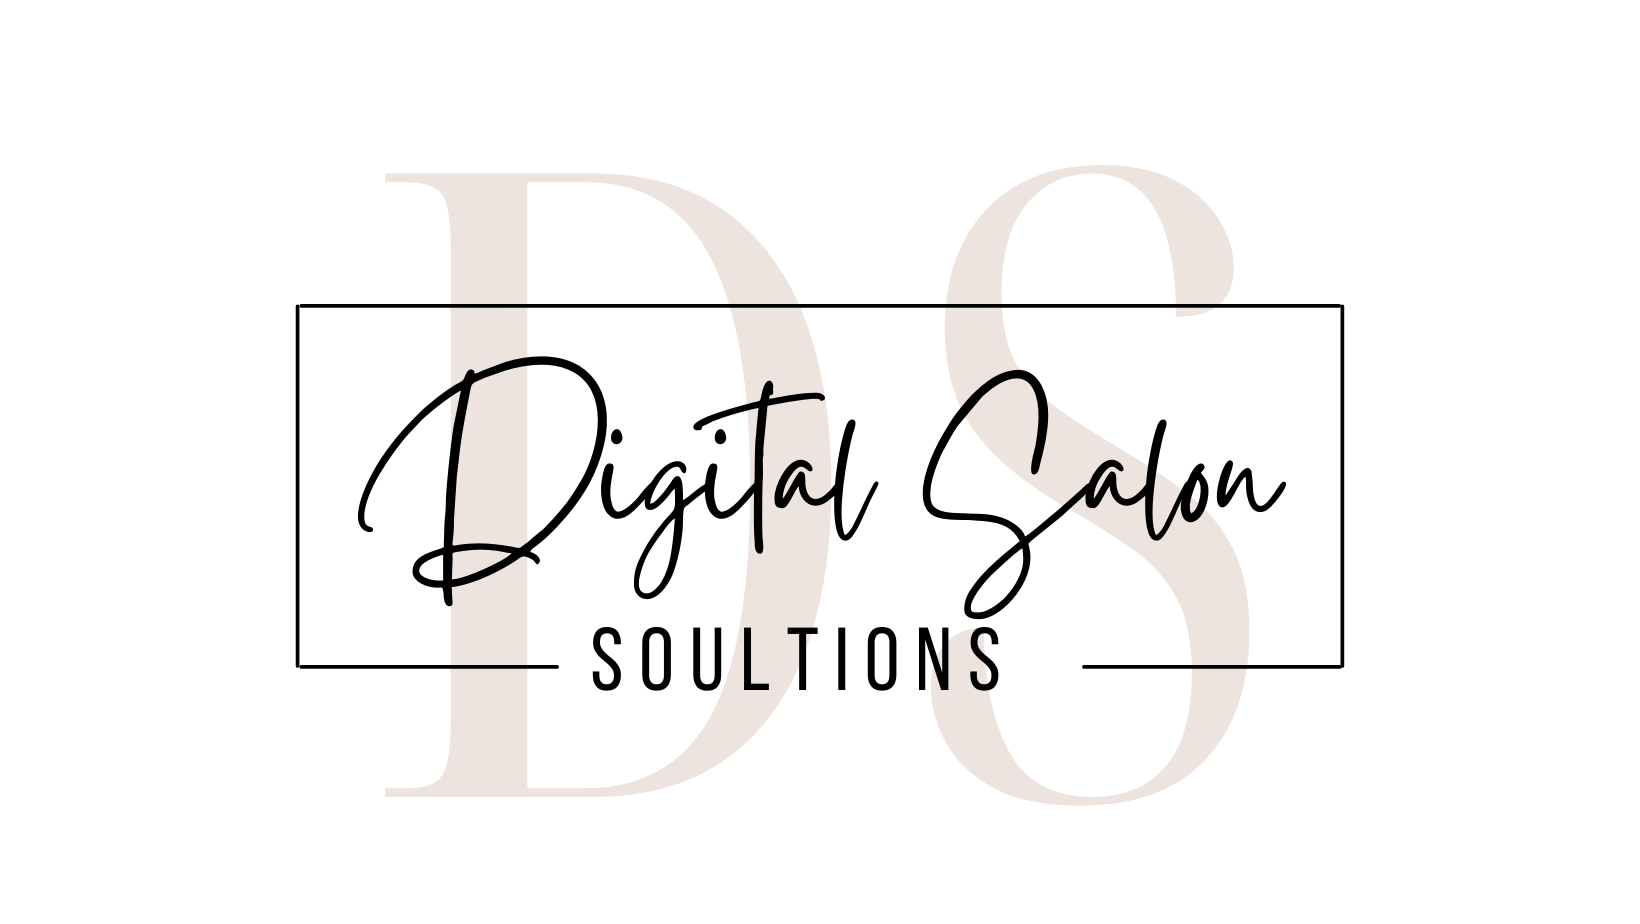 Digital Salon Solutionsのプロフィール画像